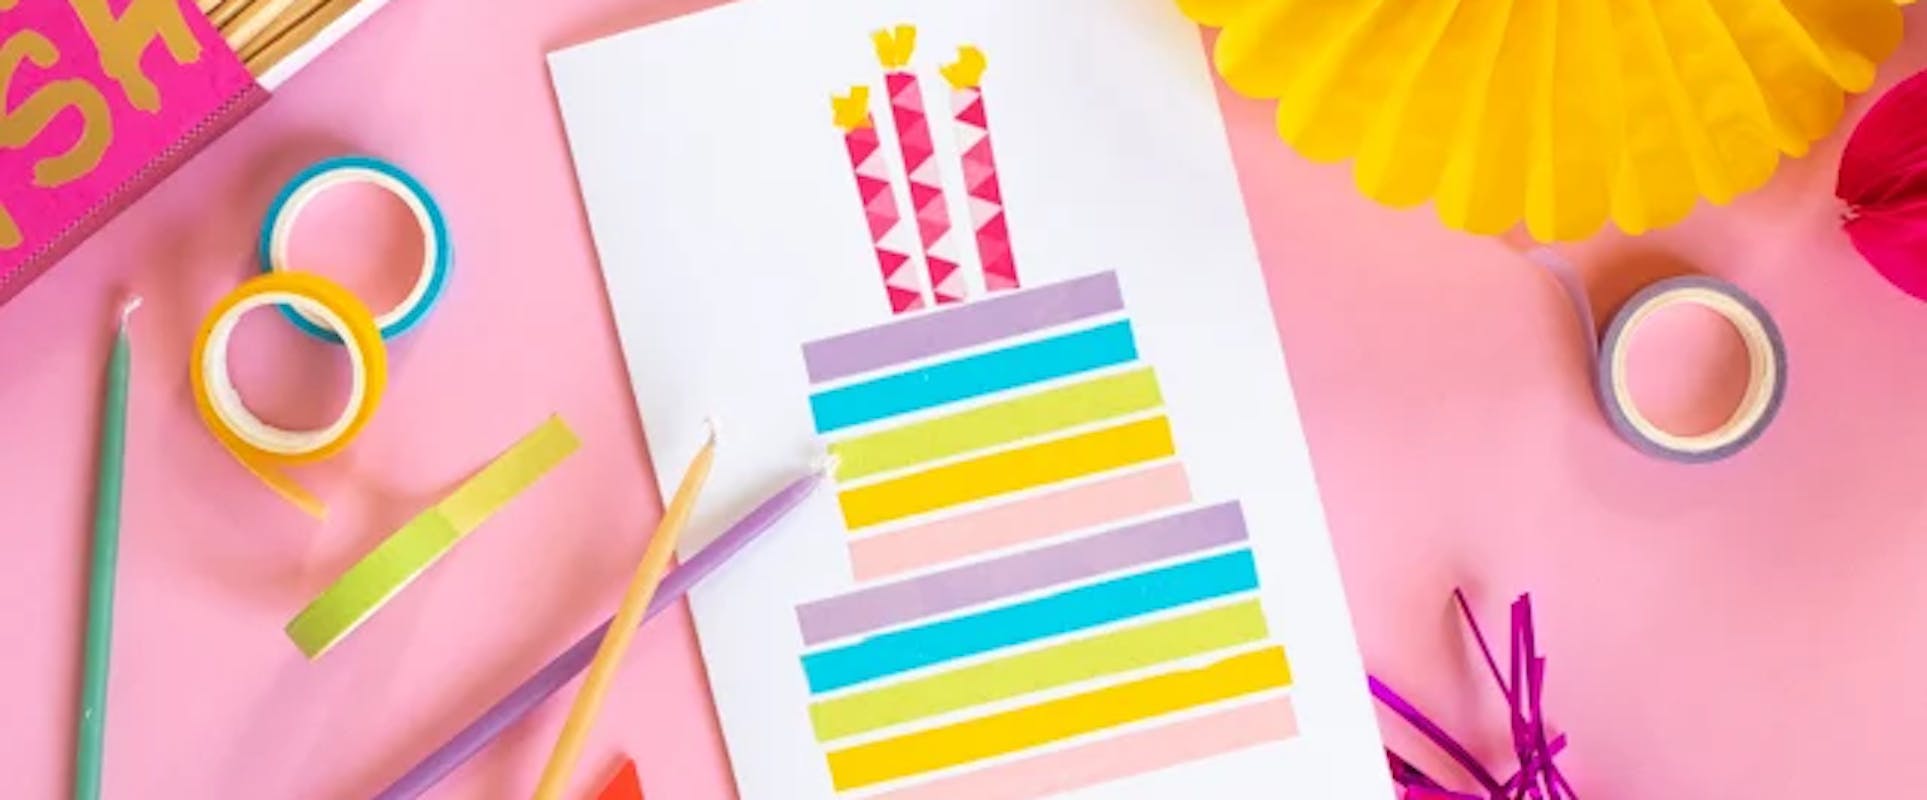 Homemade and Heartfelt: DIY Birthday Cards to Impress - DIY Candy